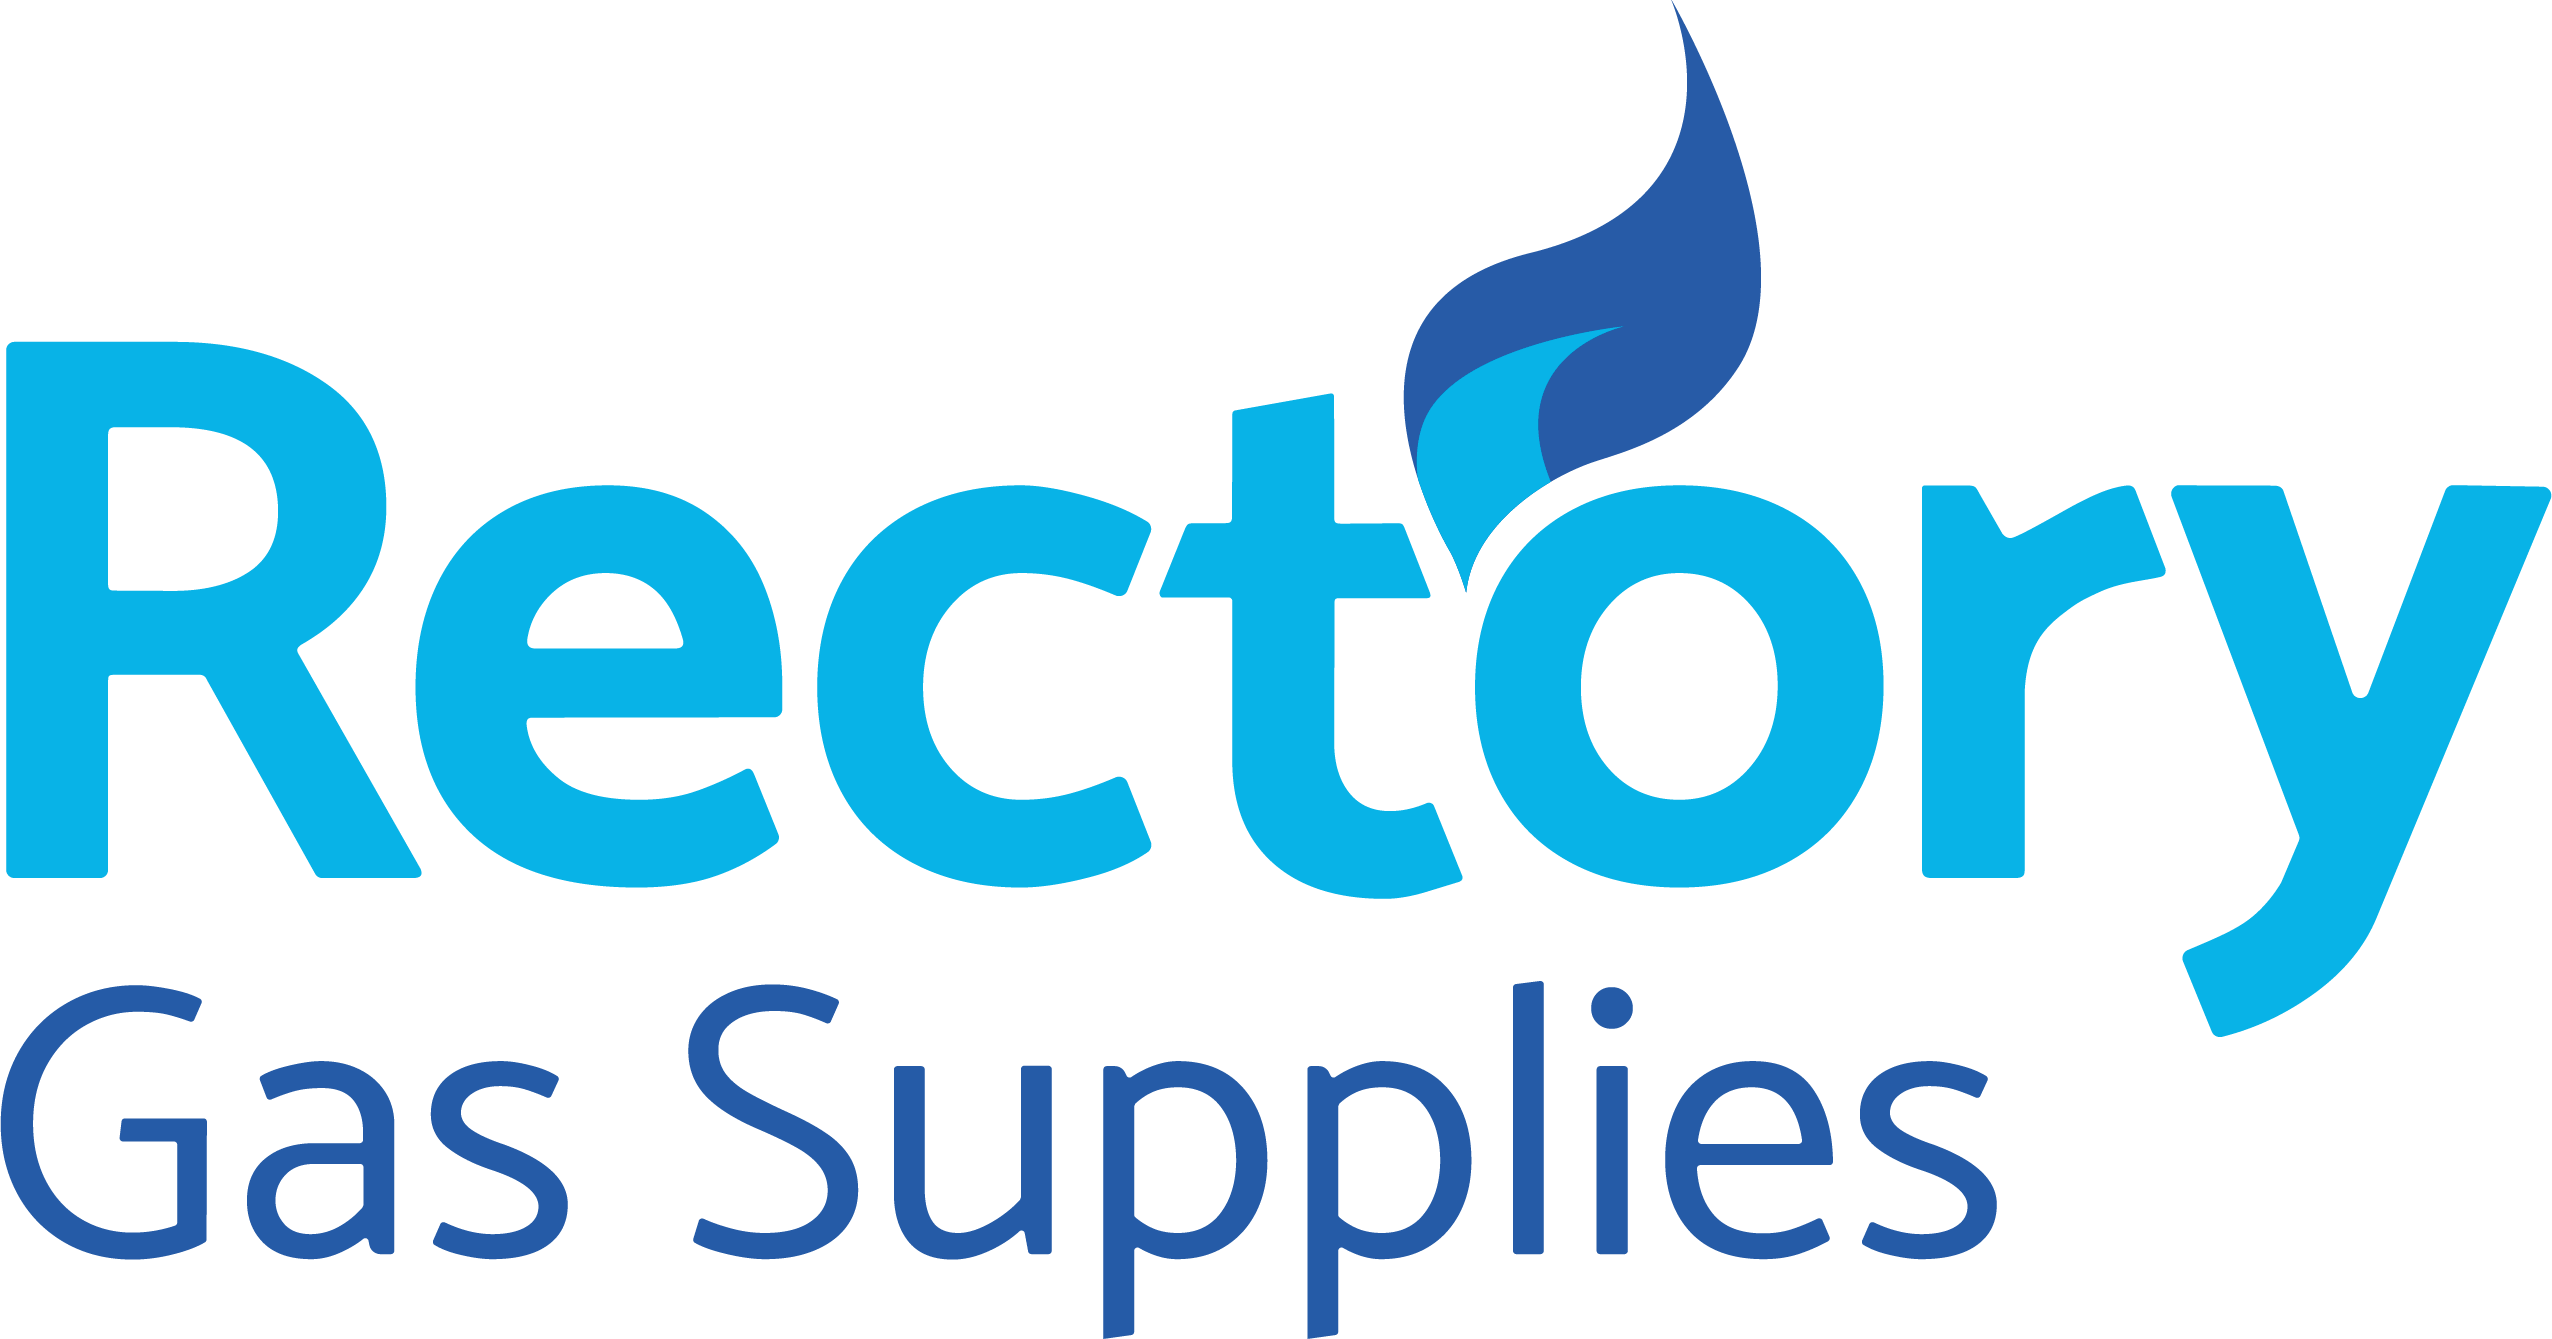 Rectory Gas Supplies